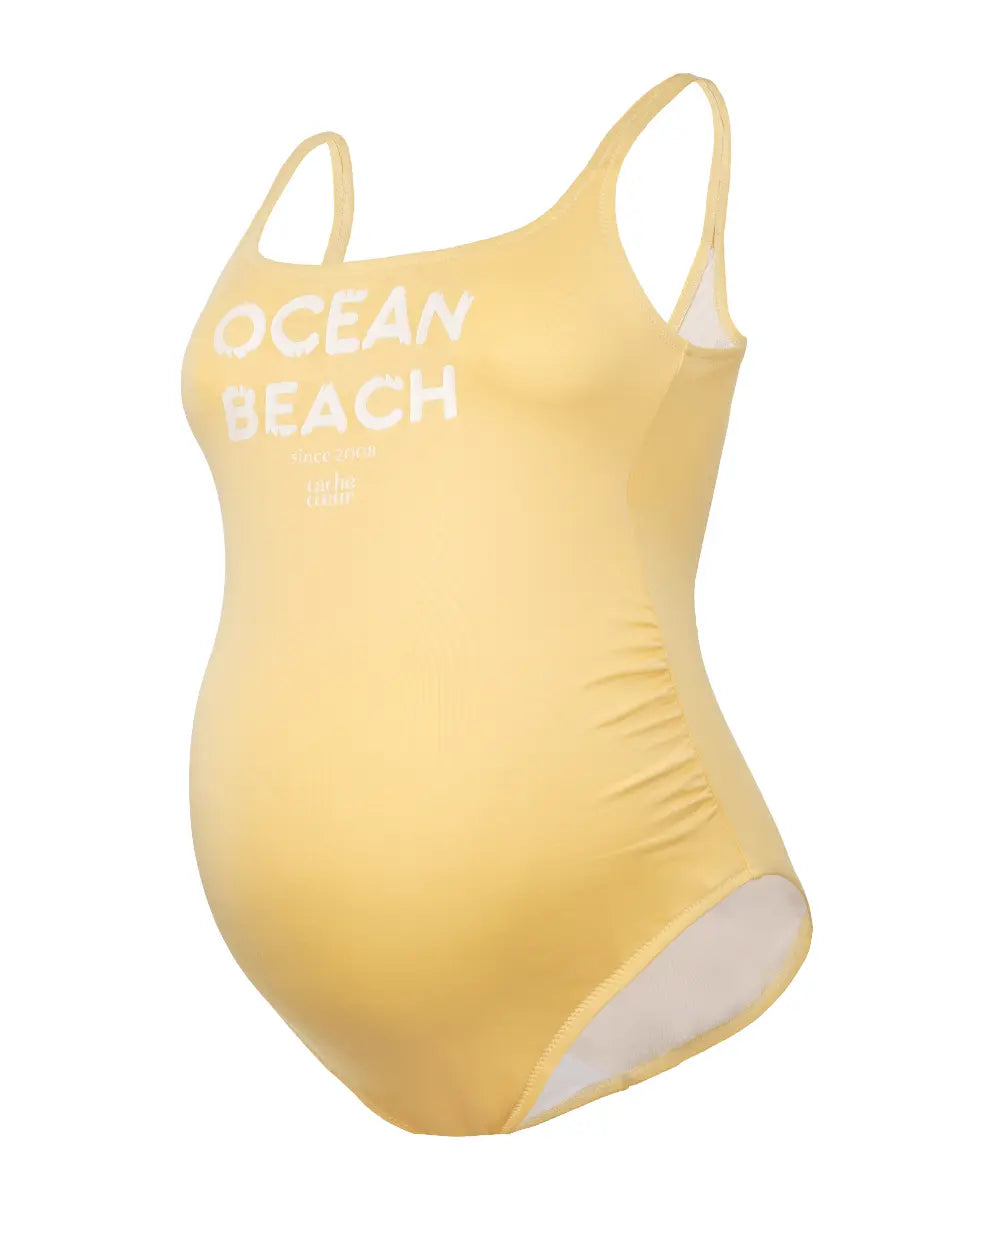 Maillot de bain grossesse ocean beach jaune, cache cœur